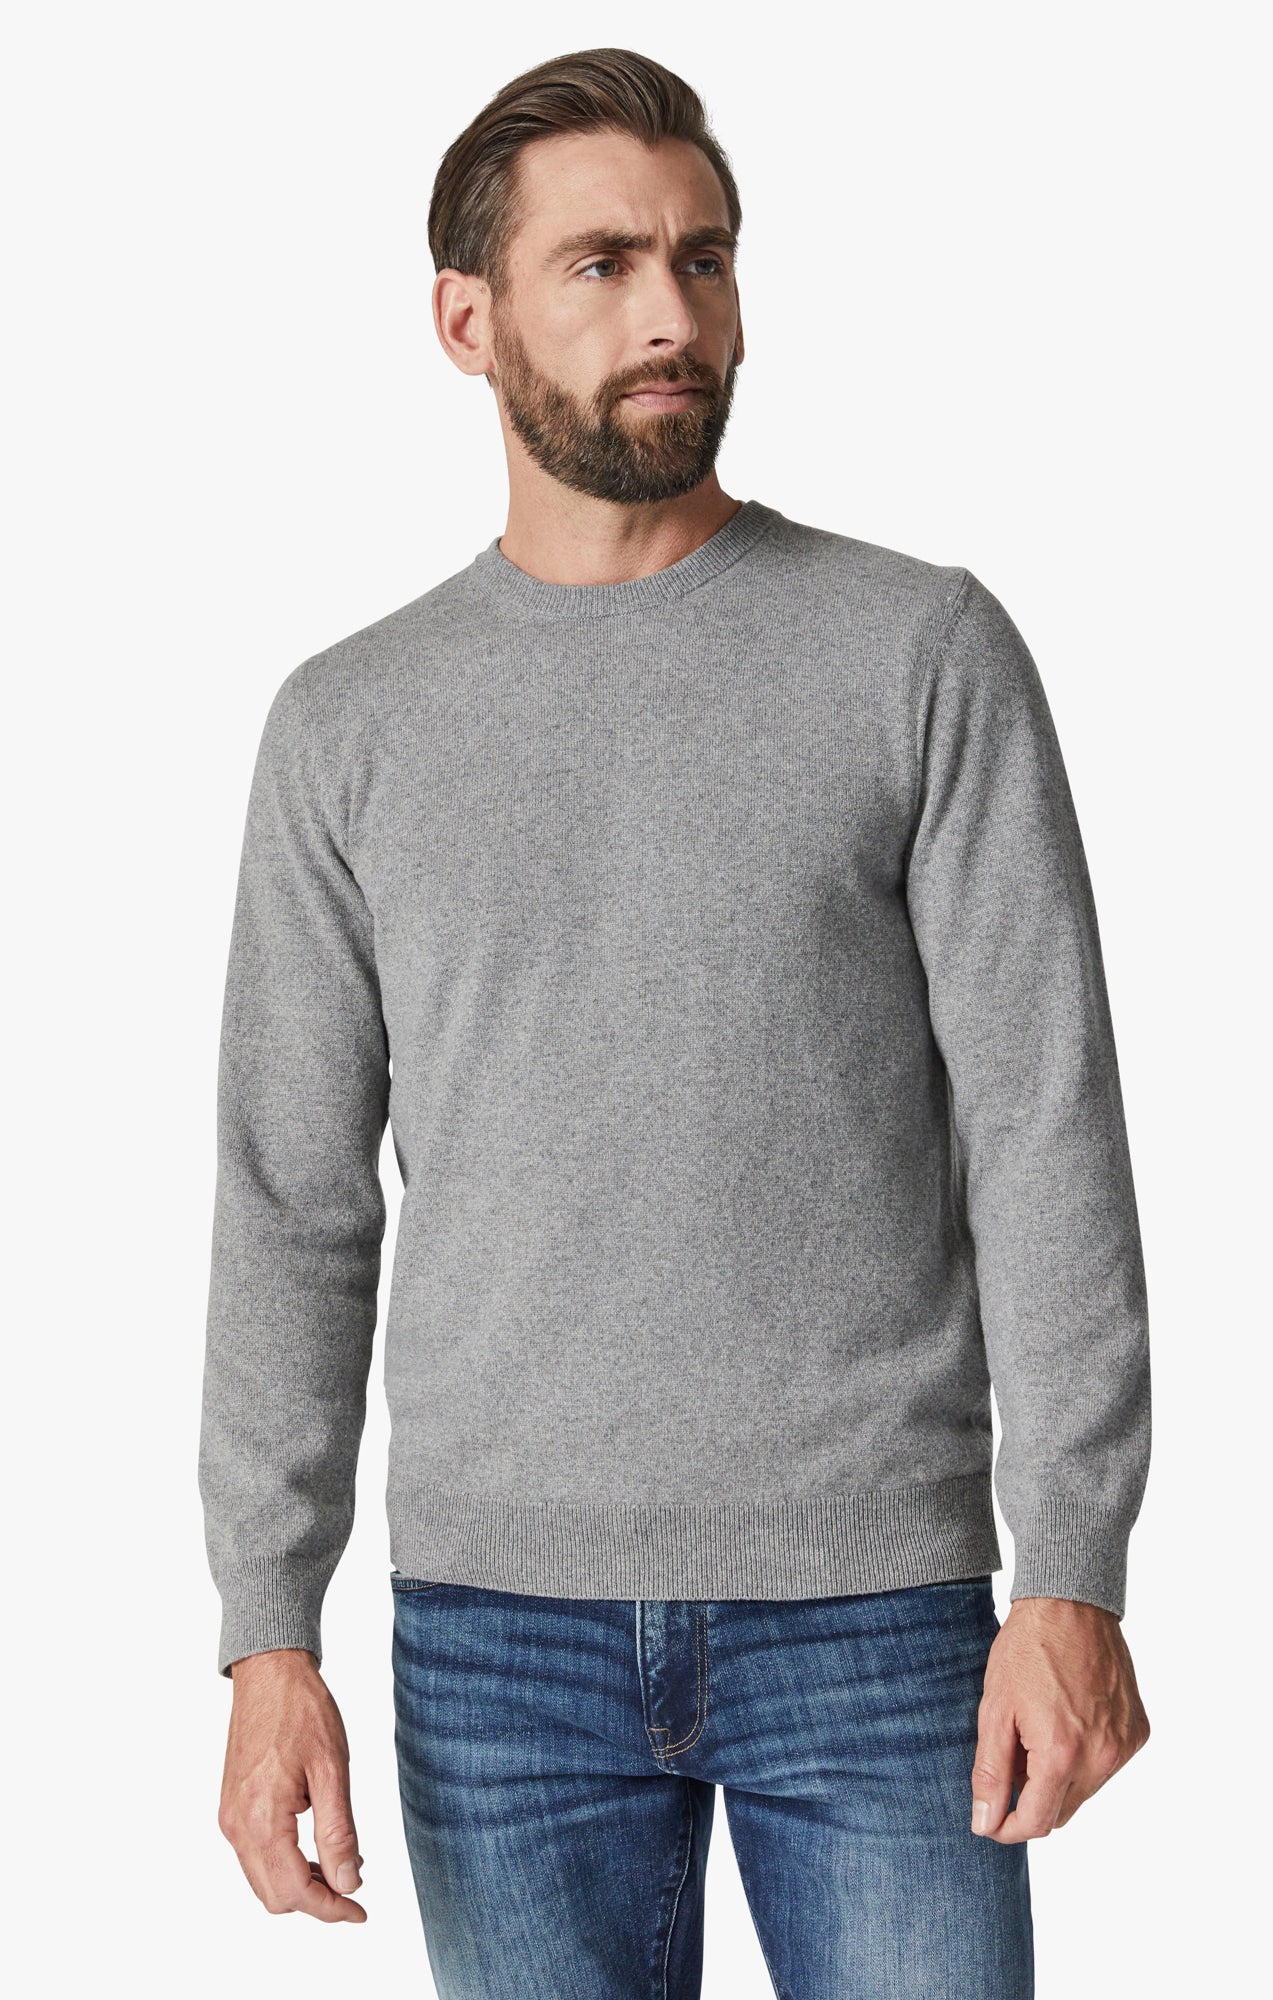 Cashmere Crew Neck Sweater In Grey Melange Image 1